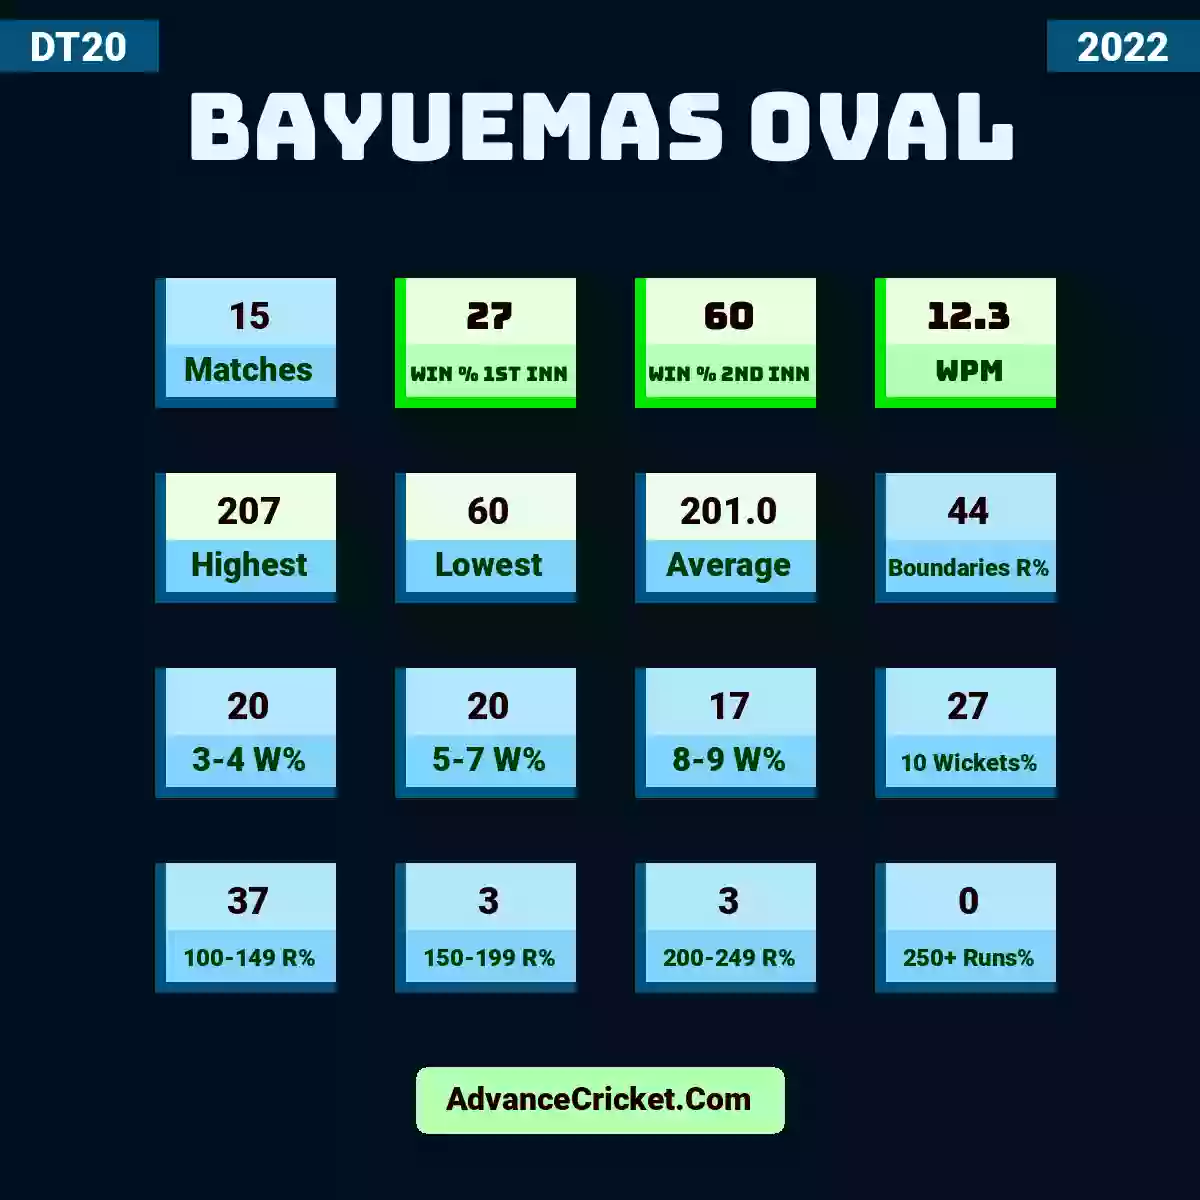 Image showing Bayuemas Oval with Matches: 15, Win % 1st Inn: 27, Win % 2nd Inn: 60, WPM: 12.3, Highest: 207, Lowest: 60, Average: 201.0, Boundaries R%: 44, 3-4 W%: 20, 5-7 W%: 20, 8-9 W%: 17, 10 Wickets%: 27, 100-149 R%: 37, 150-199 R%: 3, 200-249 R%: 3, 250+ Runs%: 0.